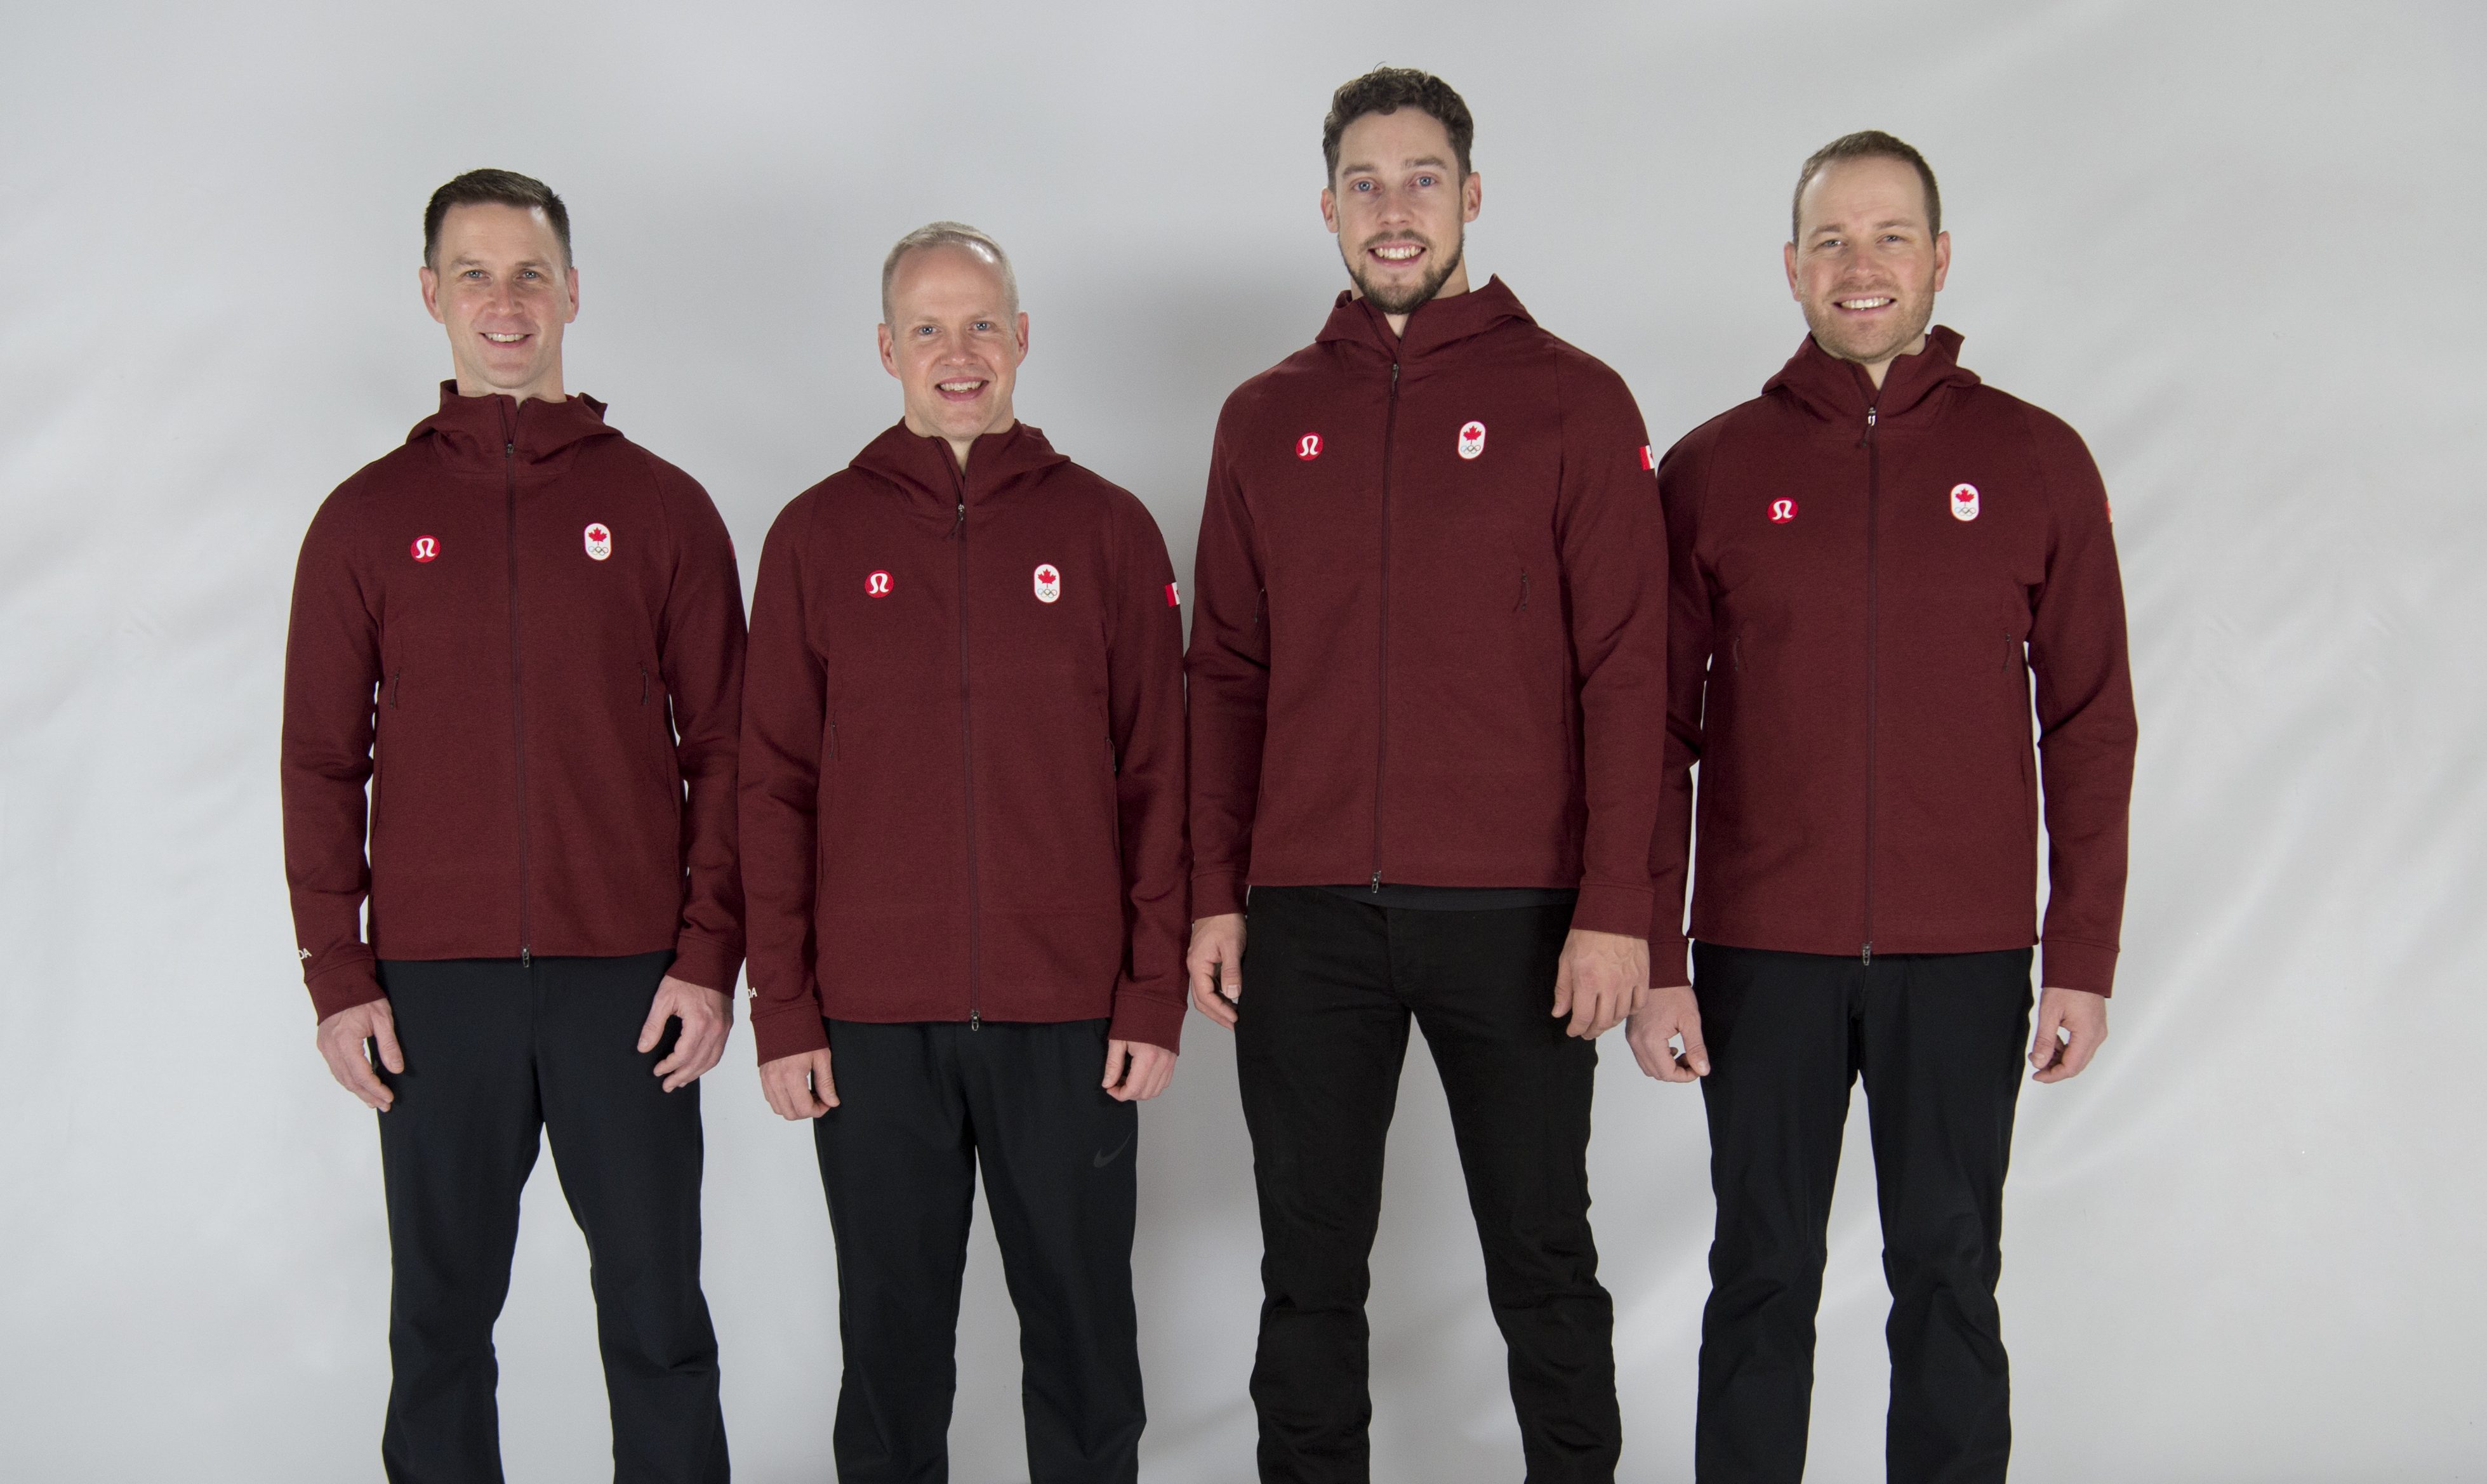 Team Gushue pose in their Team Canada lululemon jackets